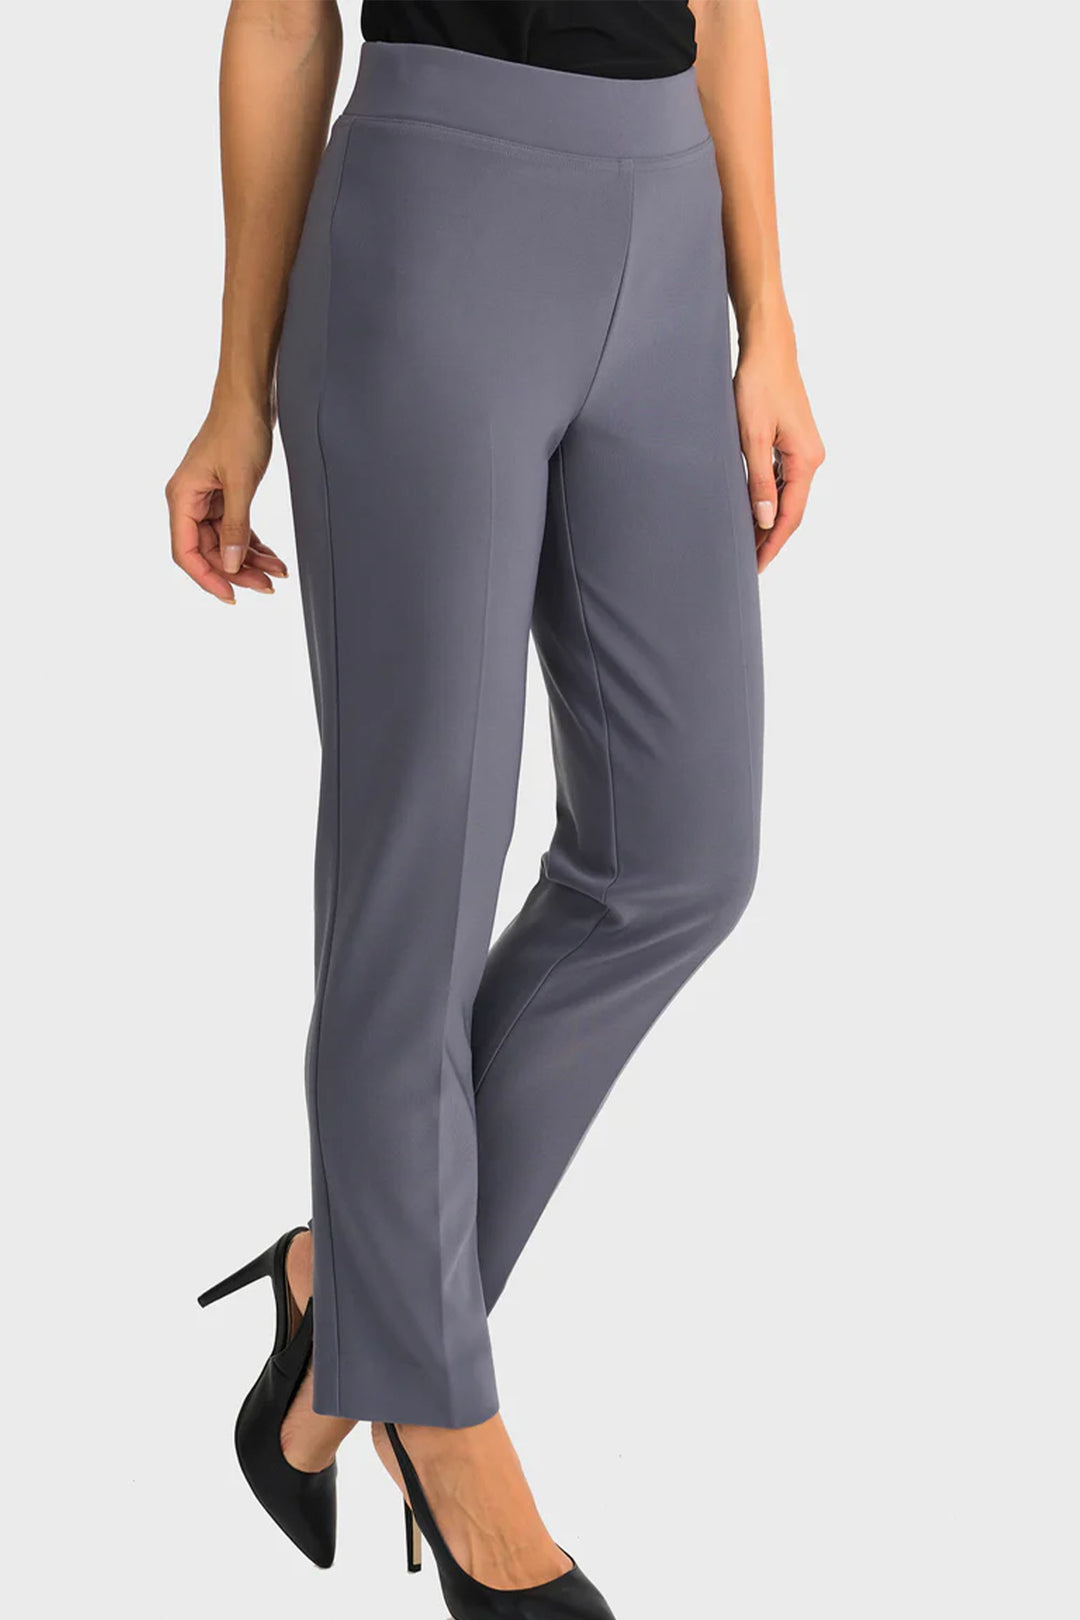 Joseph Ribkoff women's business casual slim fit basic pull-on pant - smokey grey